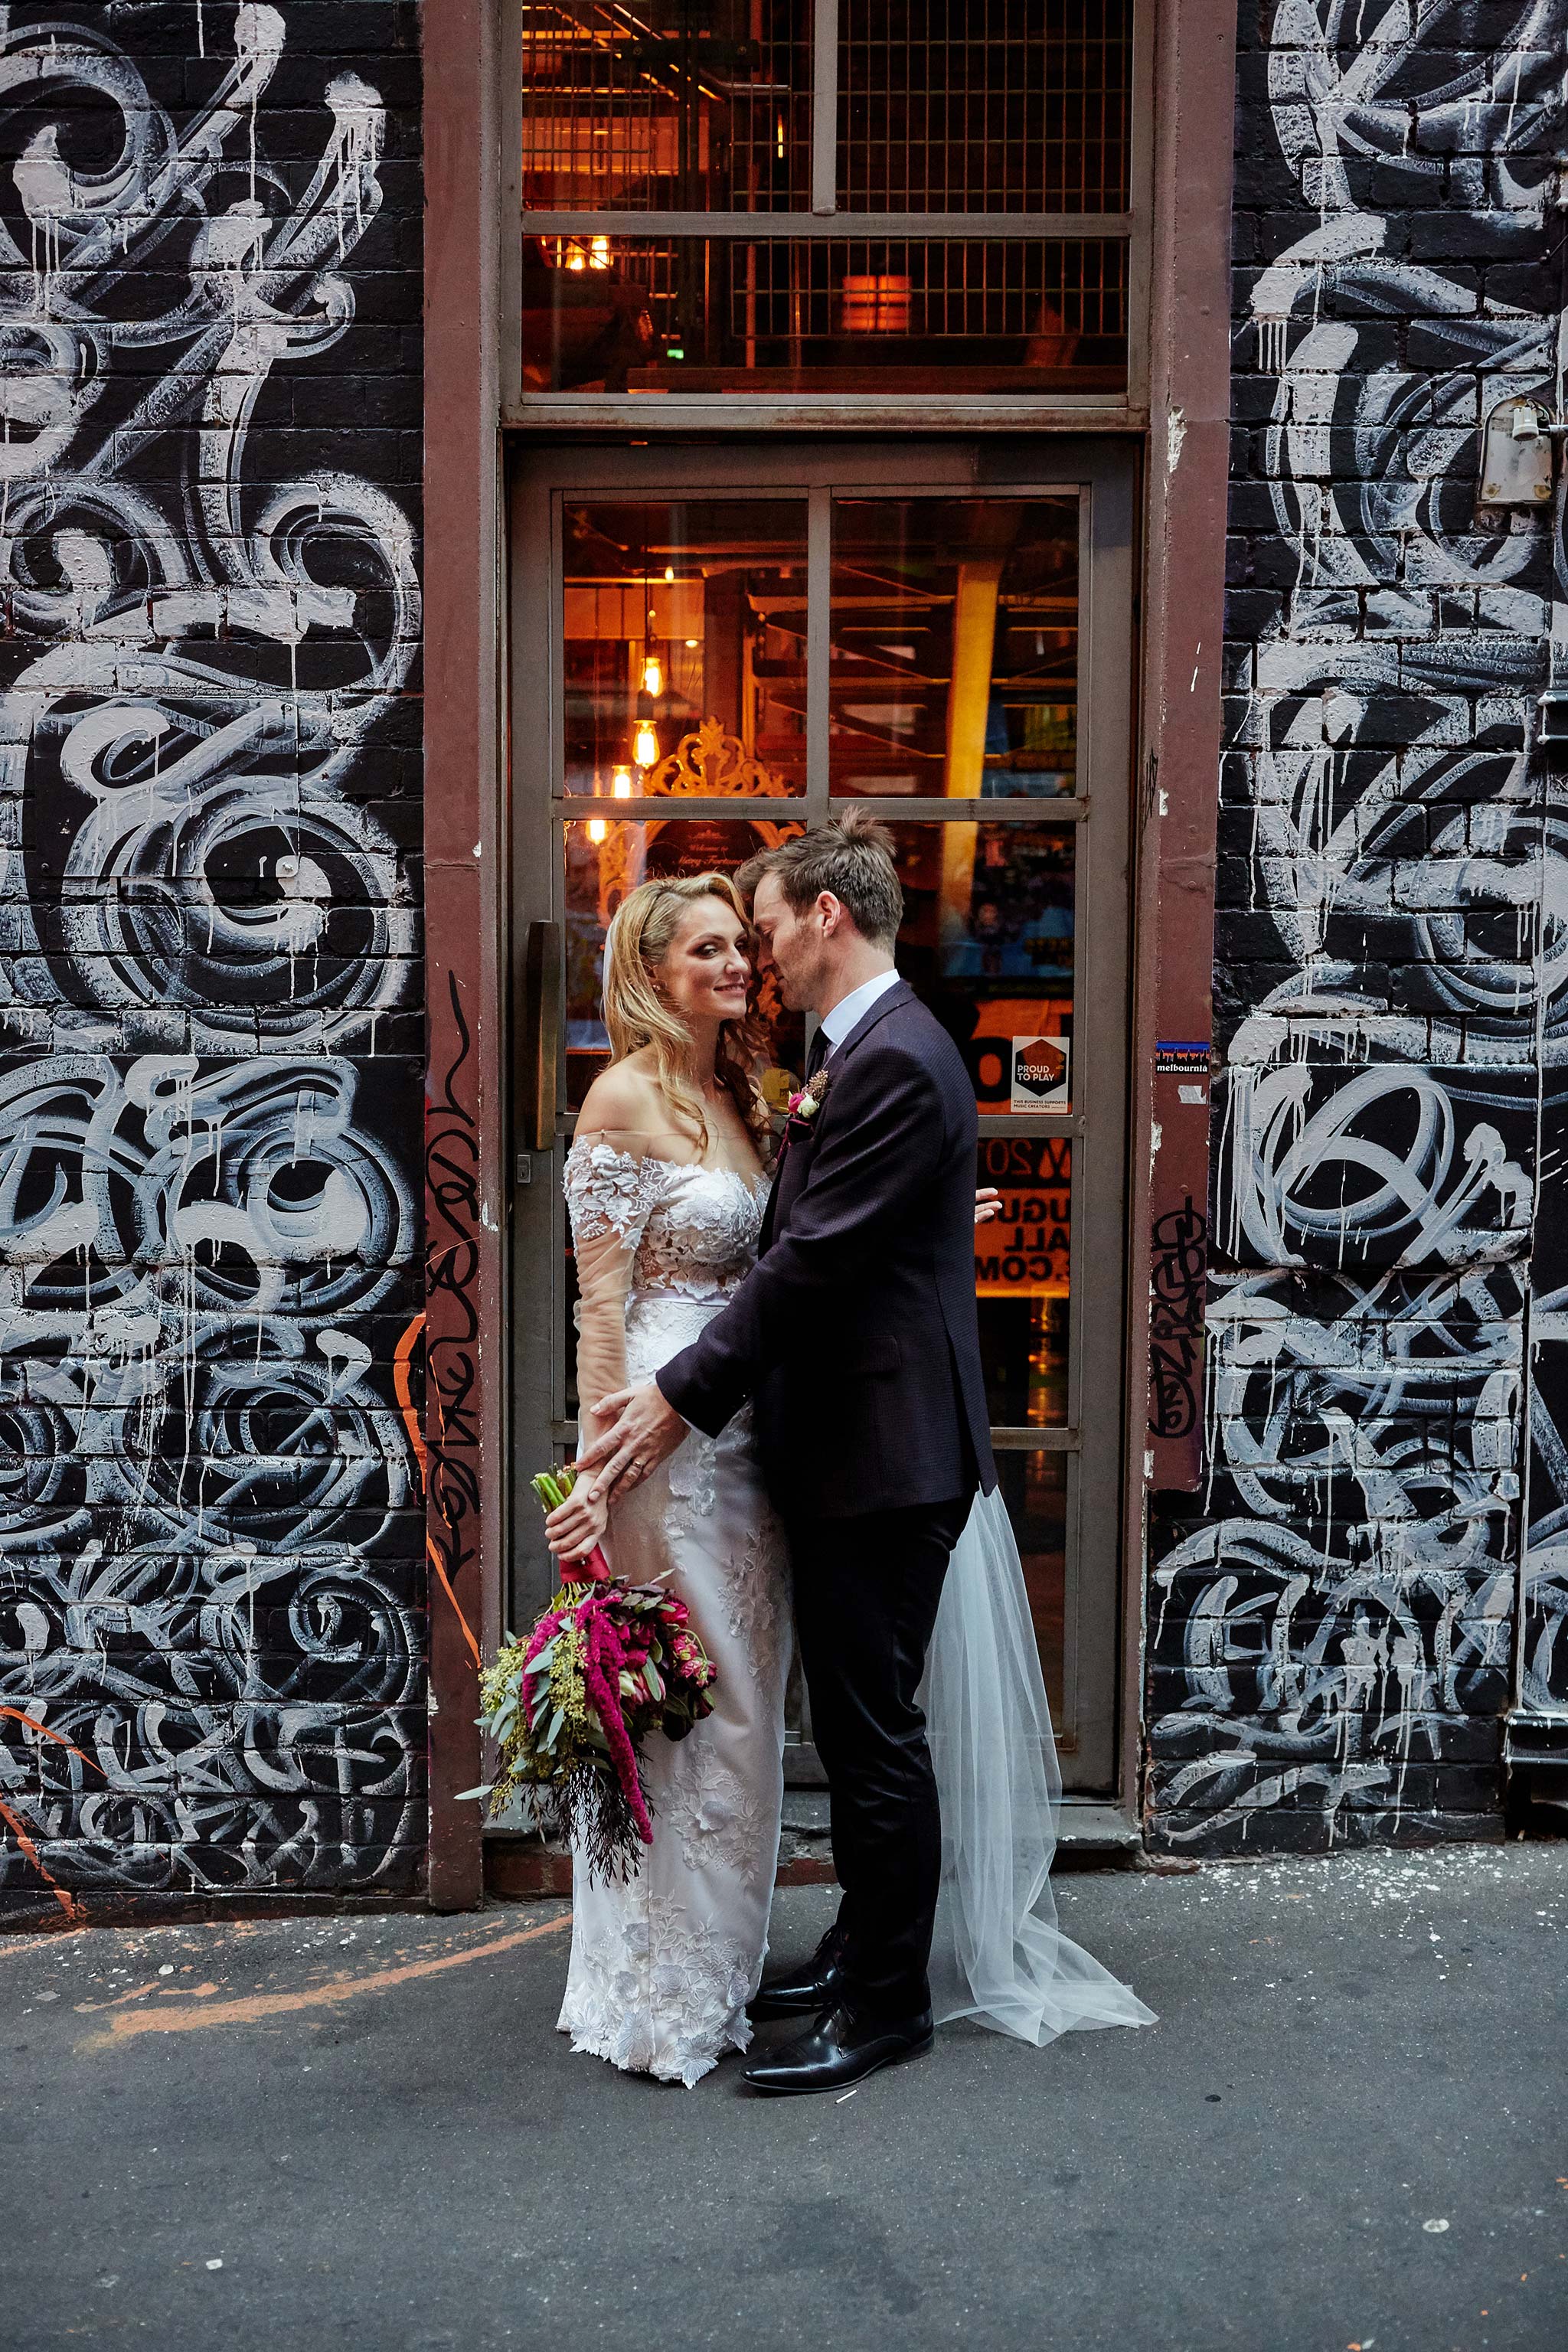 Melbourne-alley-wedding-photographer-bride-groom-portrait-graffiti